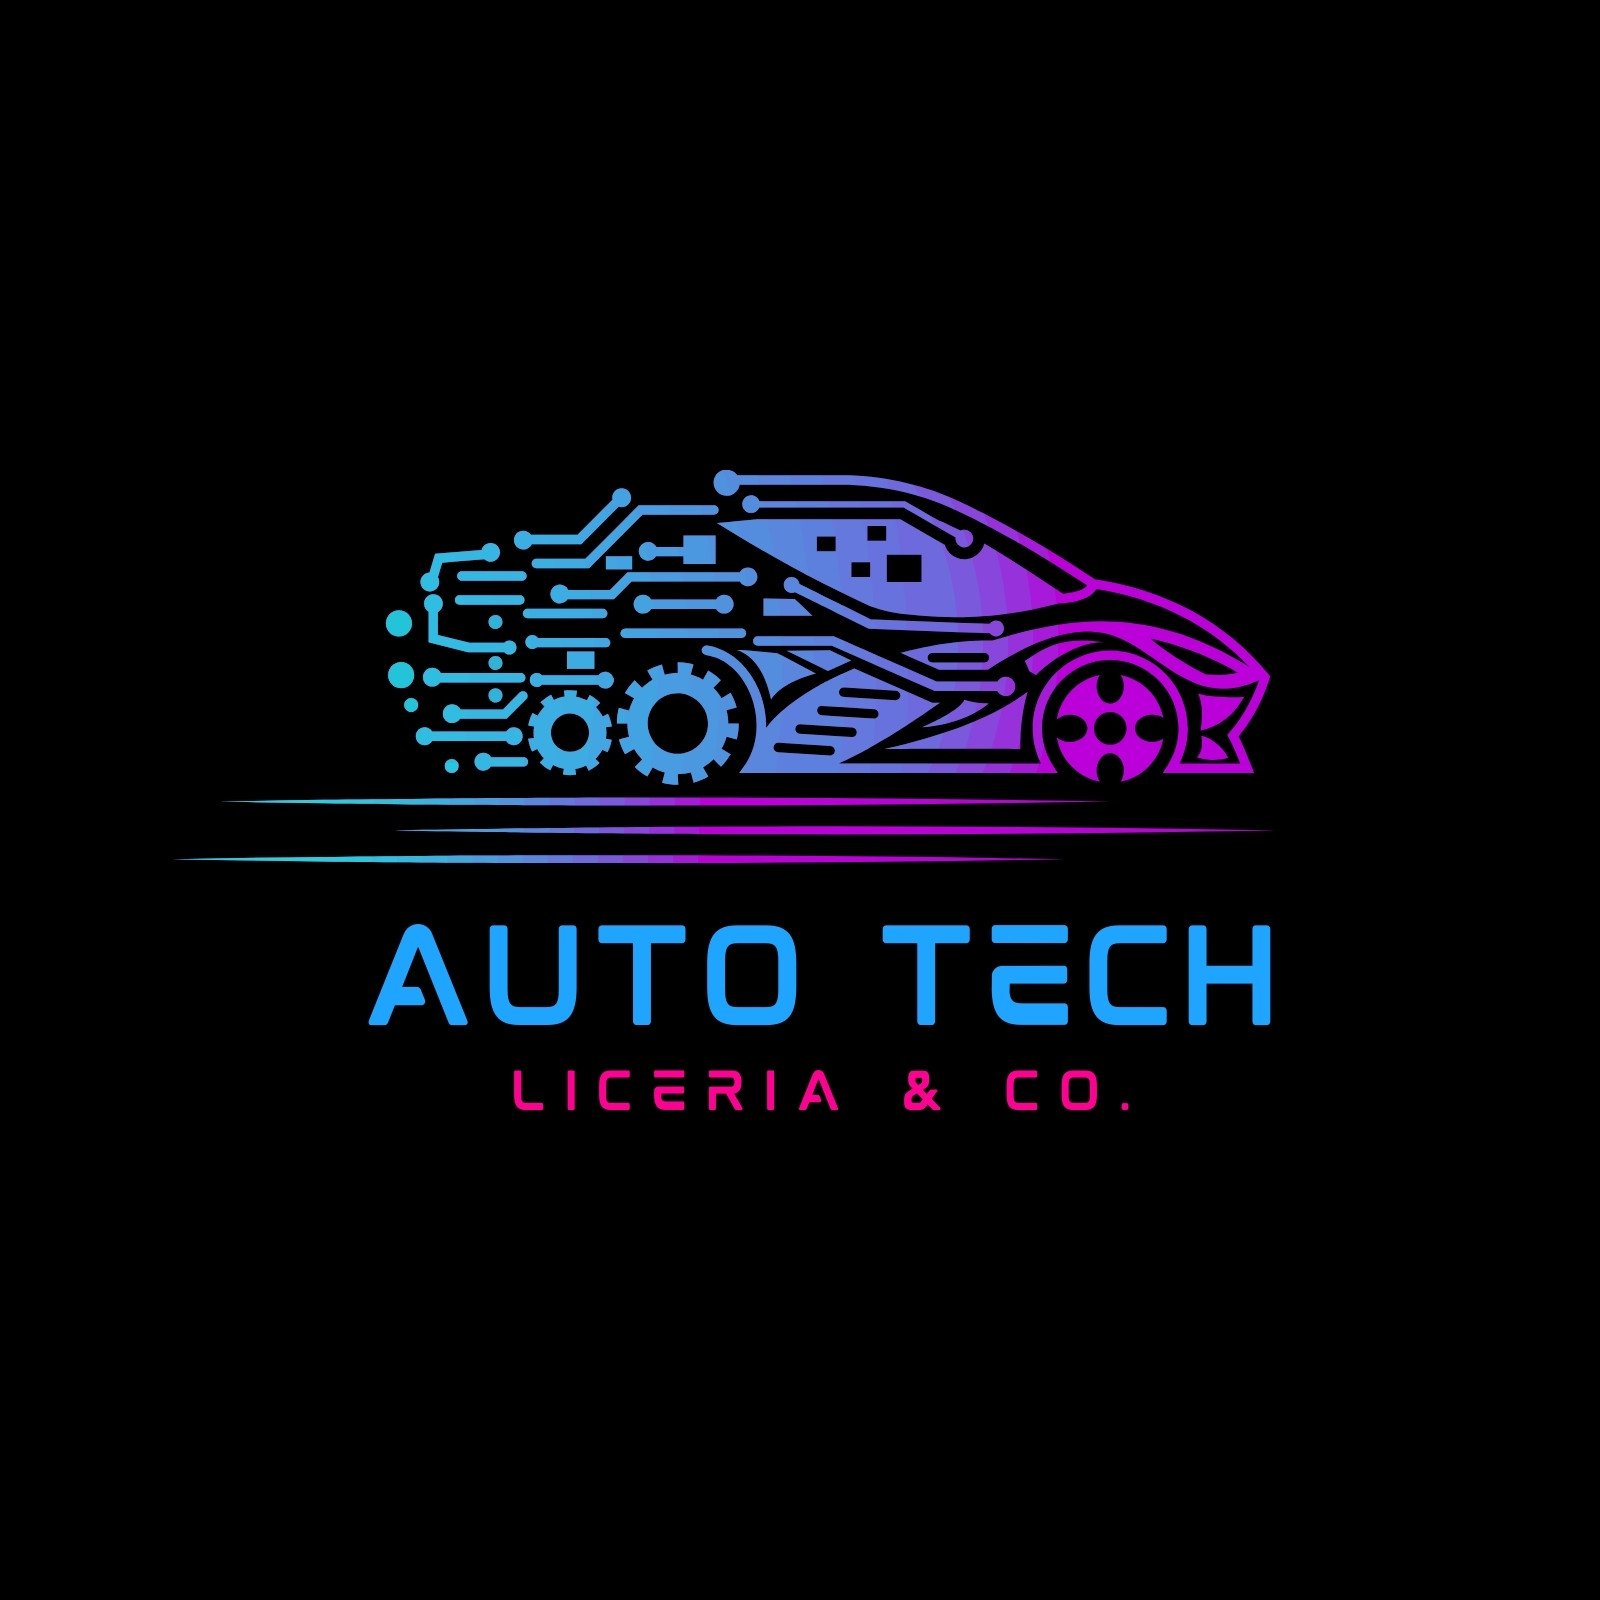 Black and Blue Retro Illustrated Automotive Technology Logo